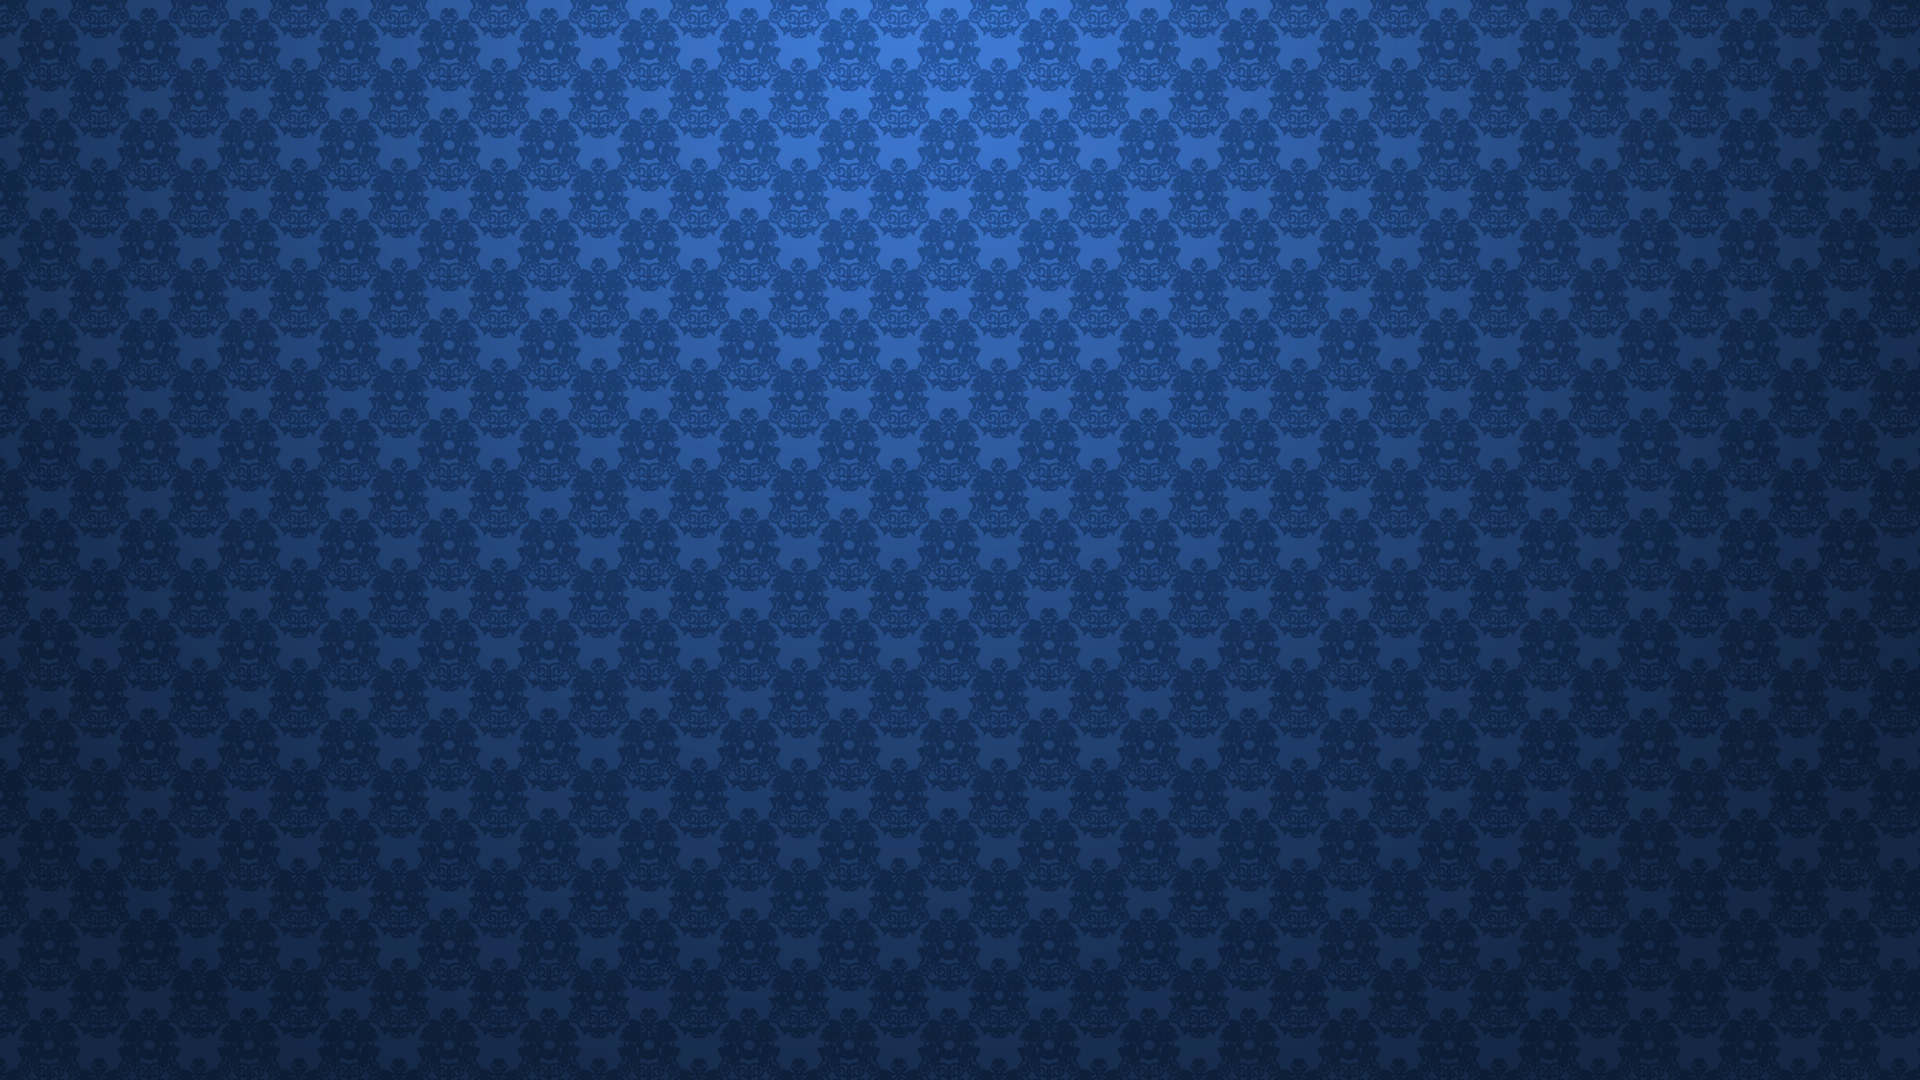 General 1920x1080 abstract texture blue background pattern black digital art